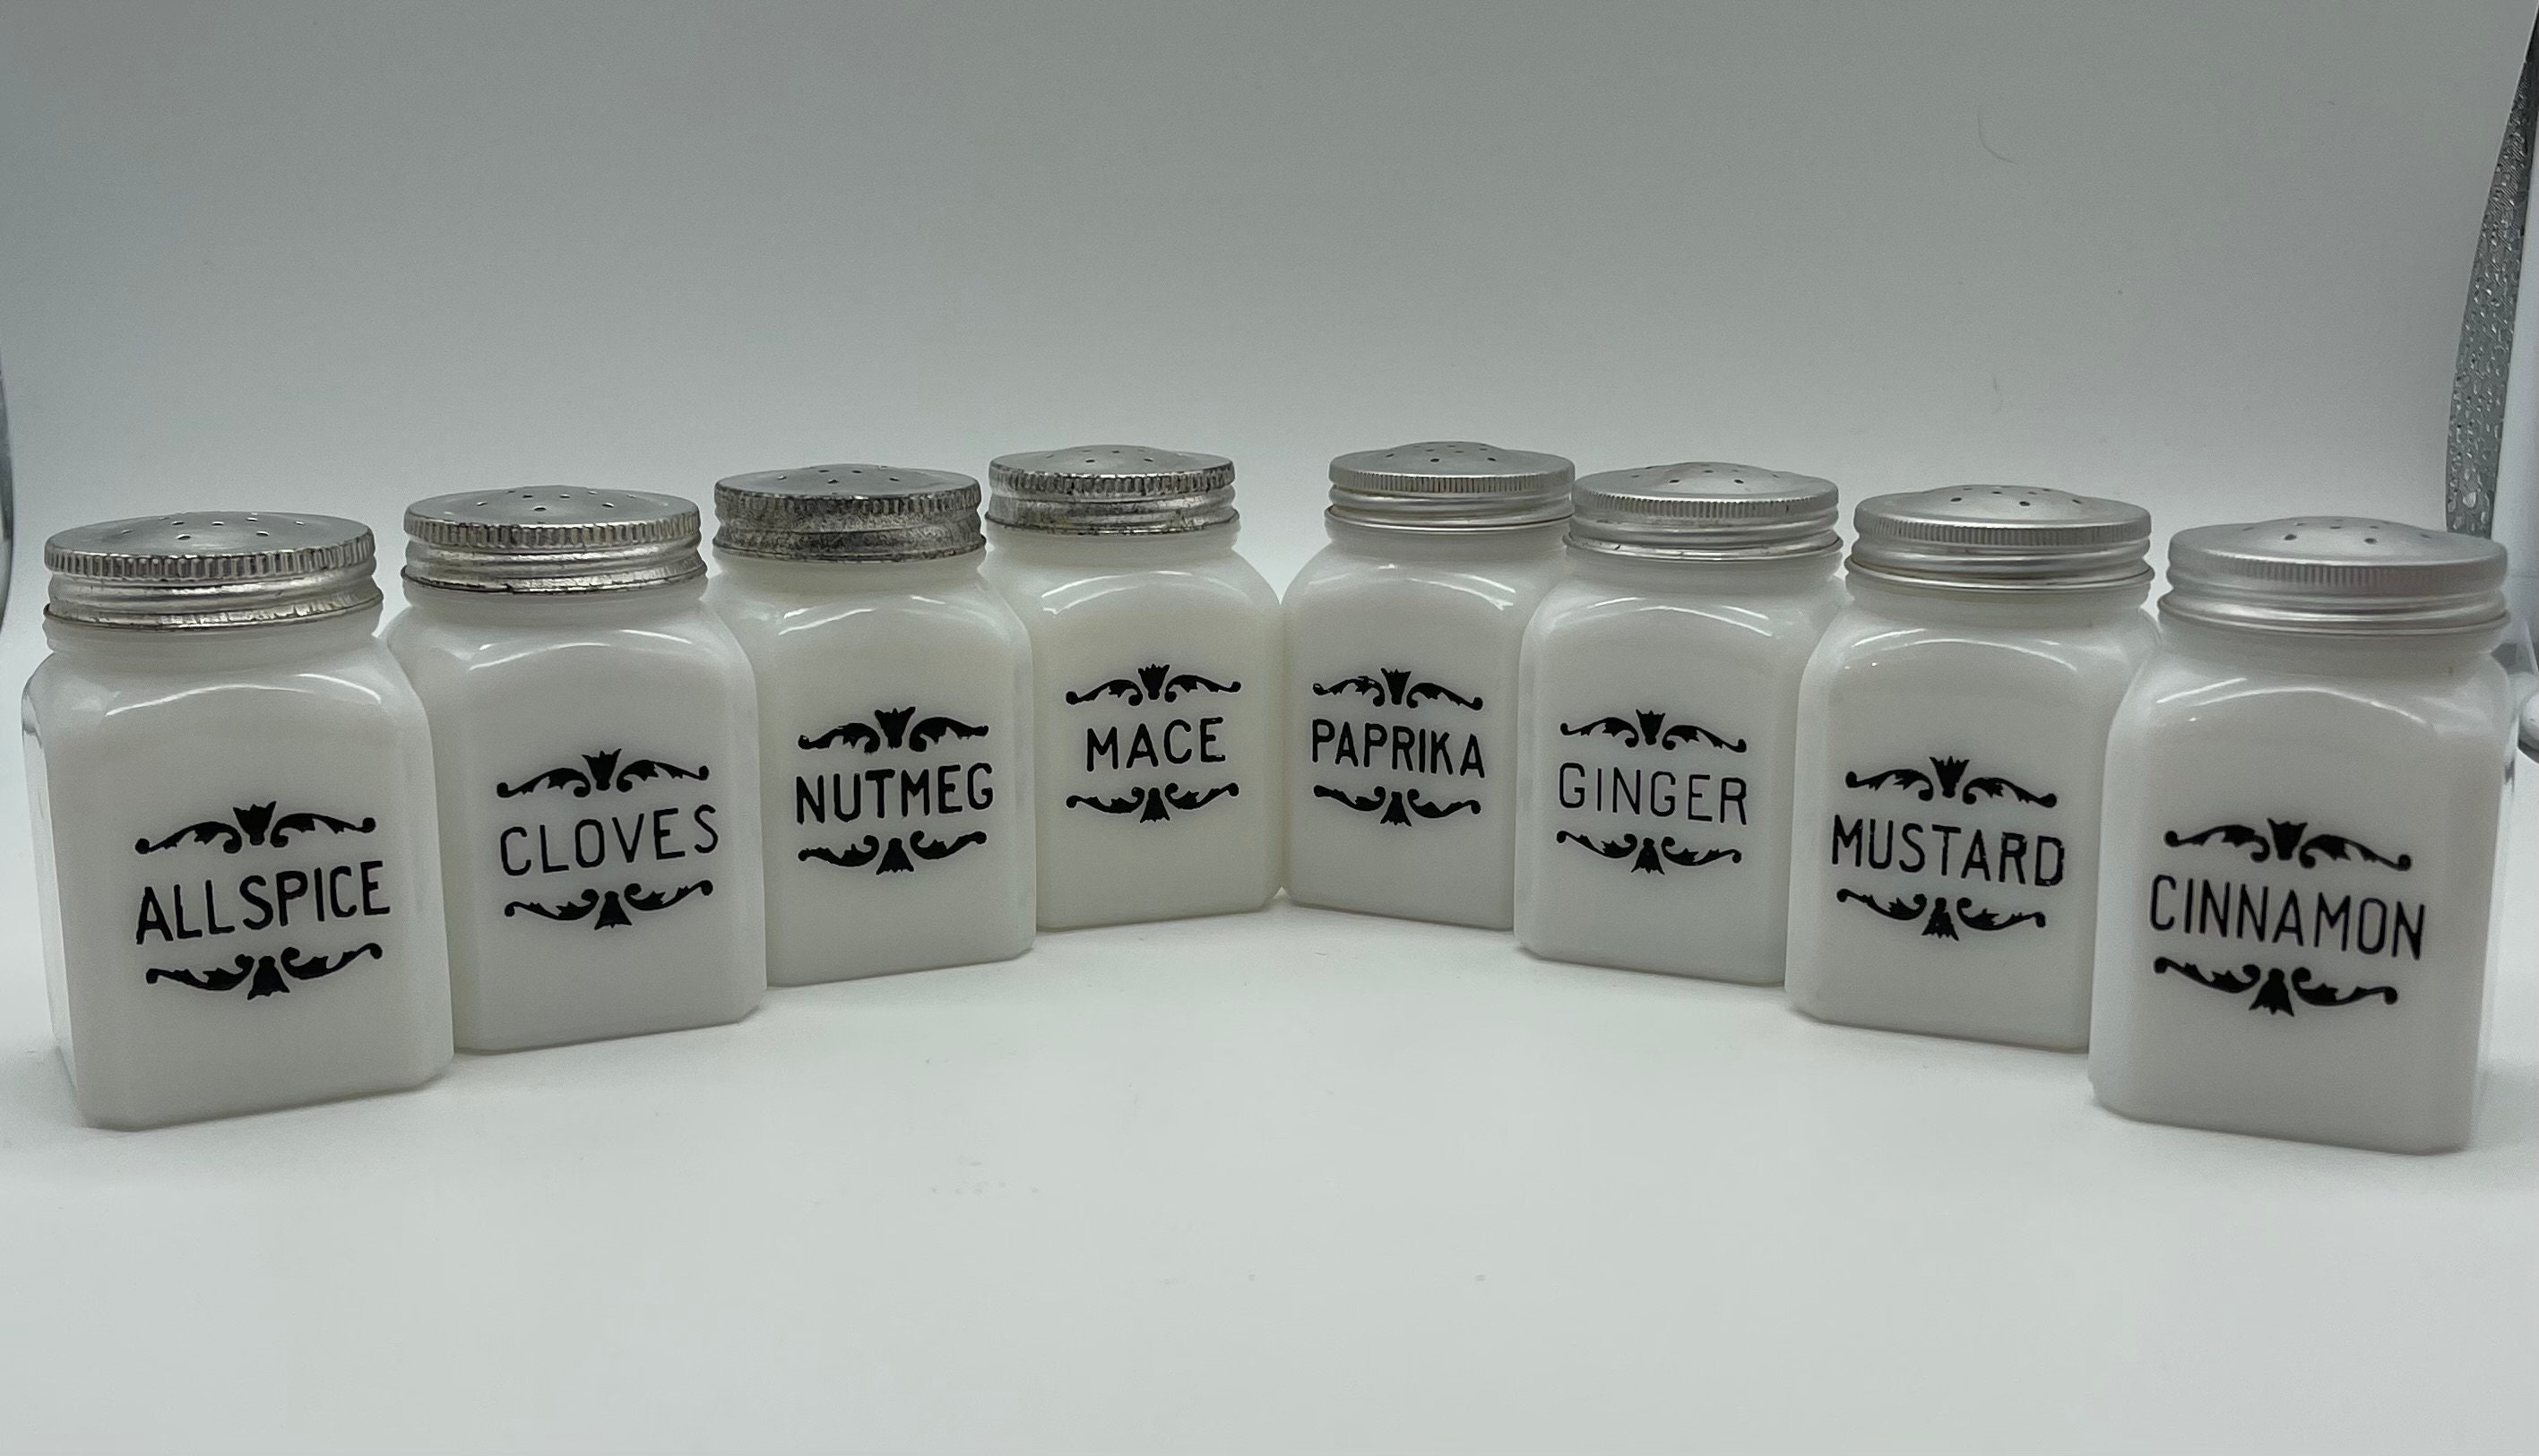 4 oz Clear Glass Spice Jars (White PP Cap) - SP4